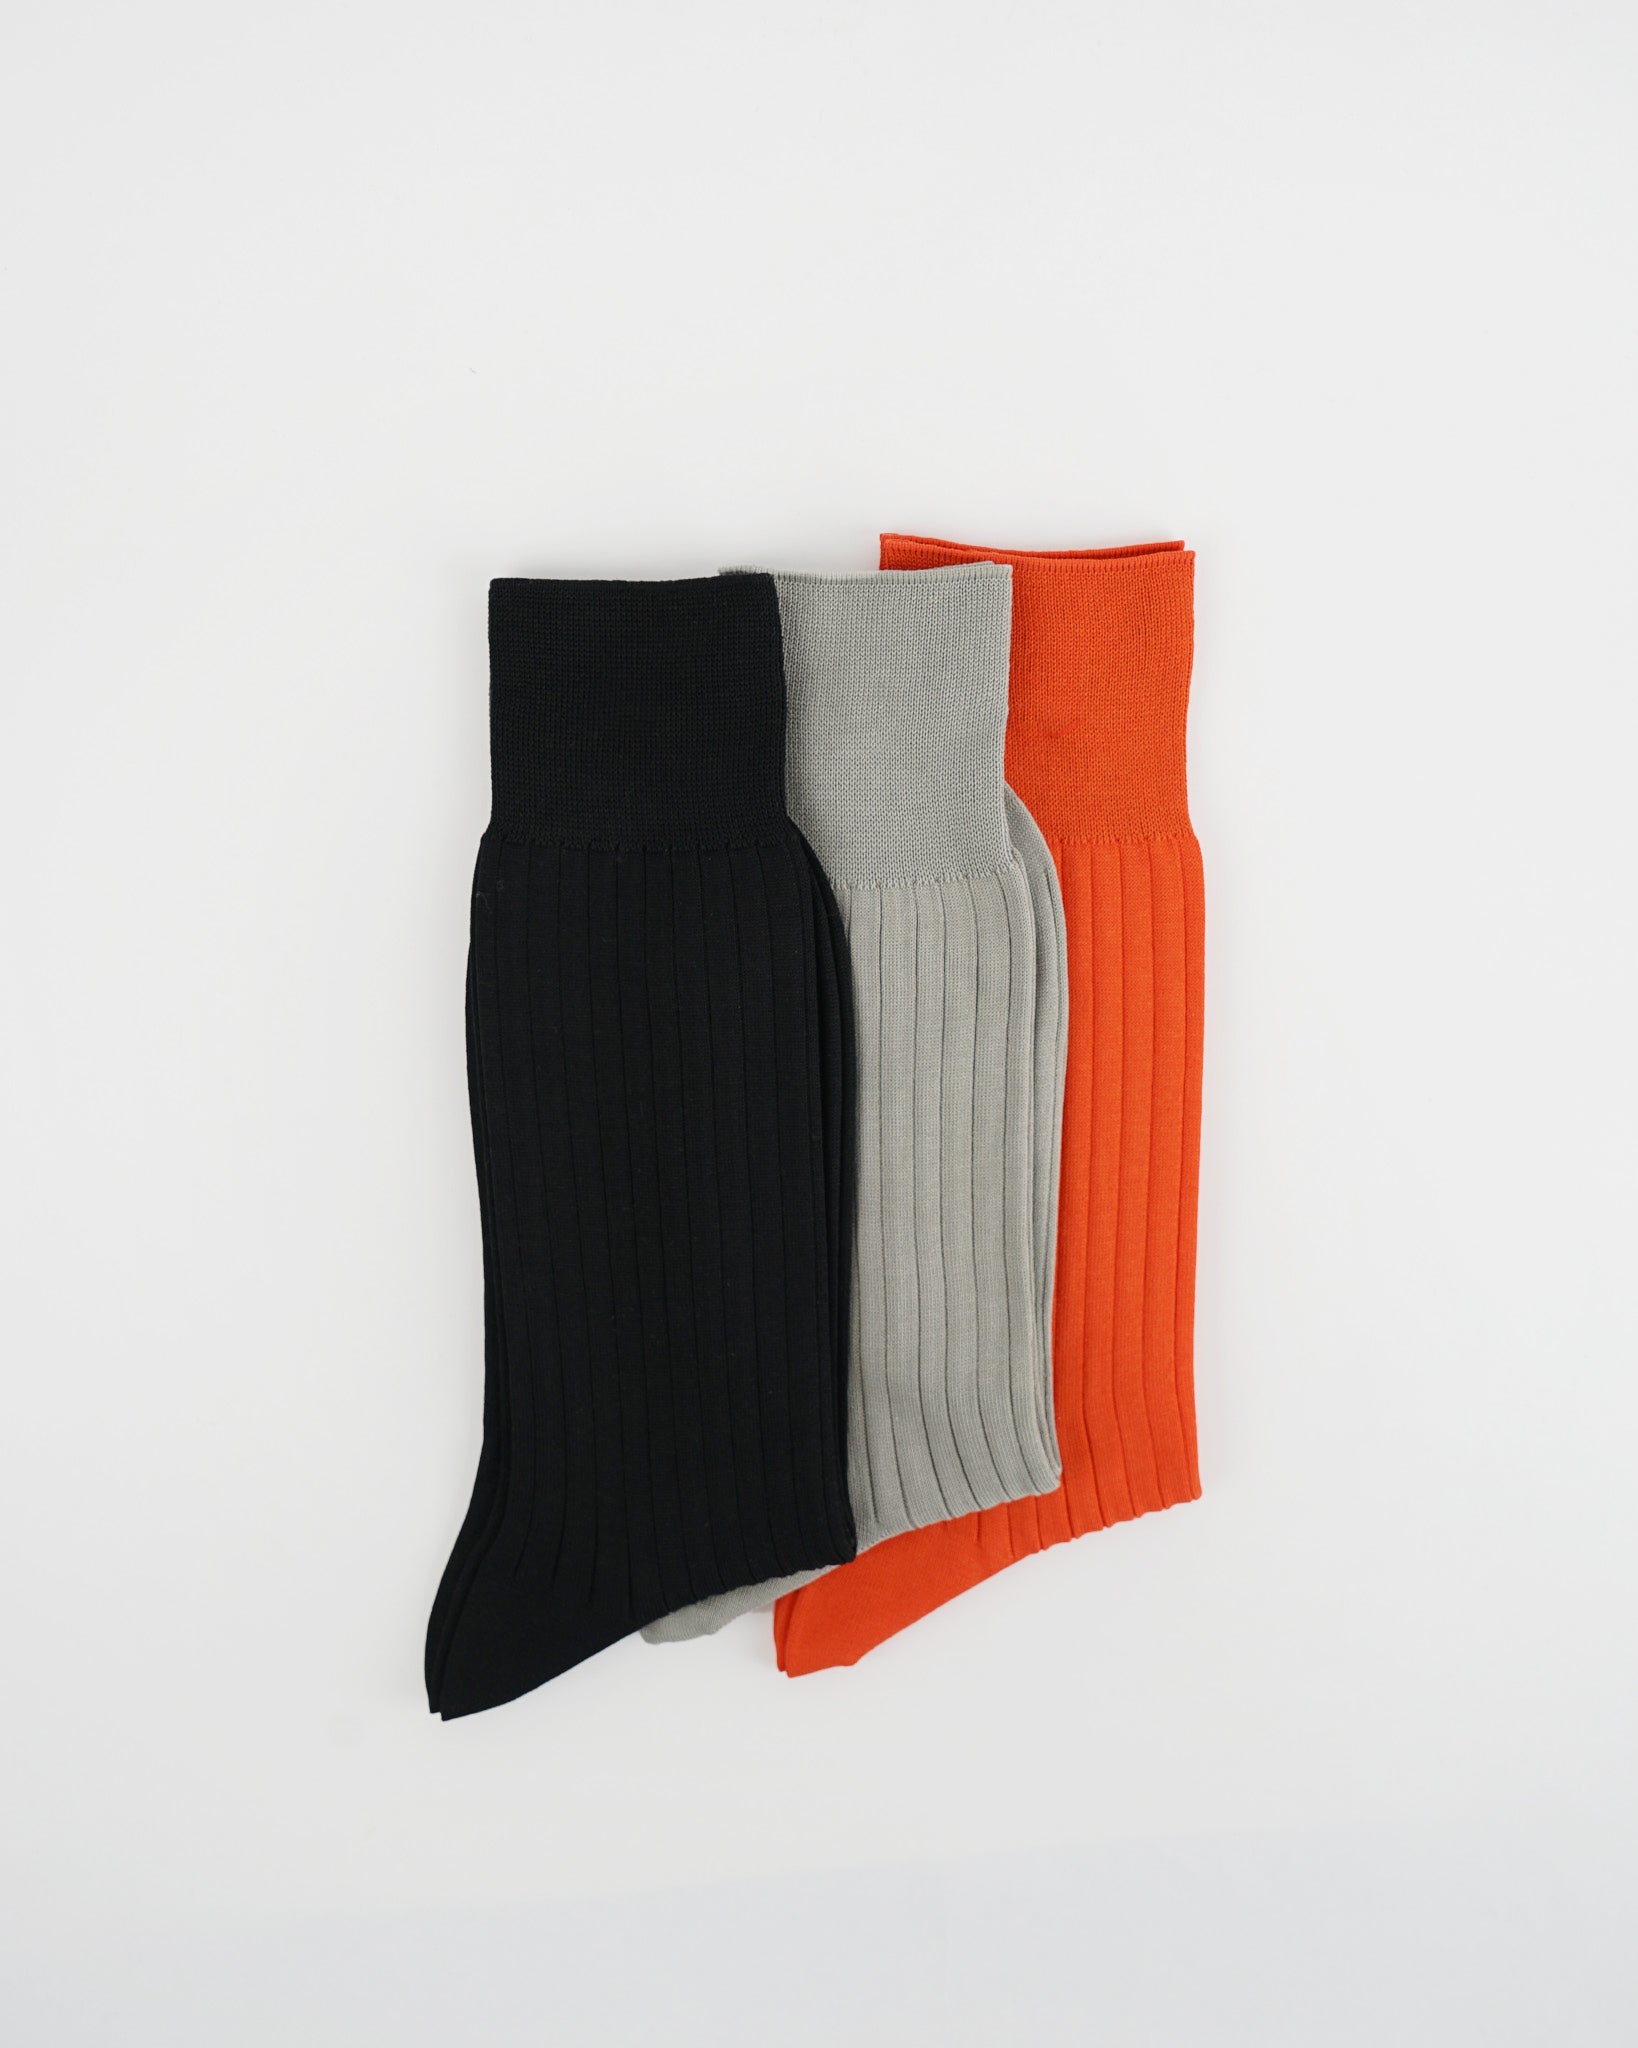 Dress Socks Set / Orange Black Light Gray